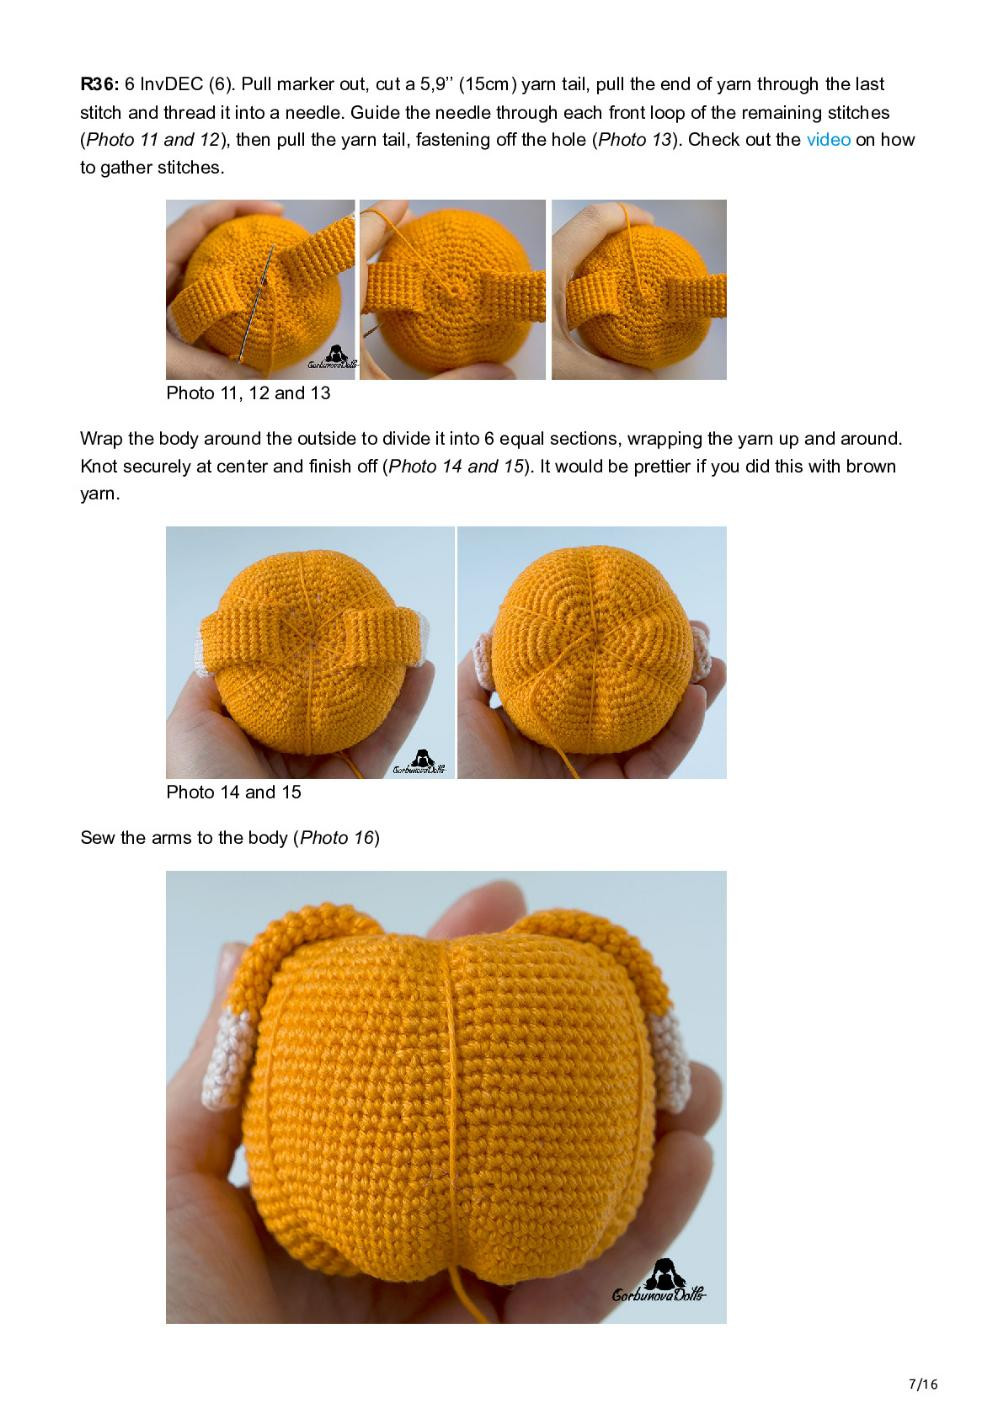 FREE Crochet Halloween Pumpkin Gnome Pattern